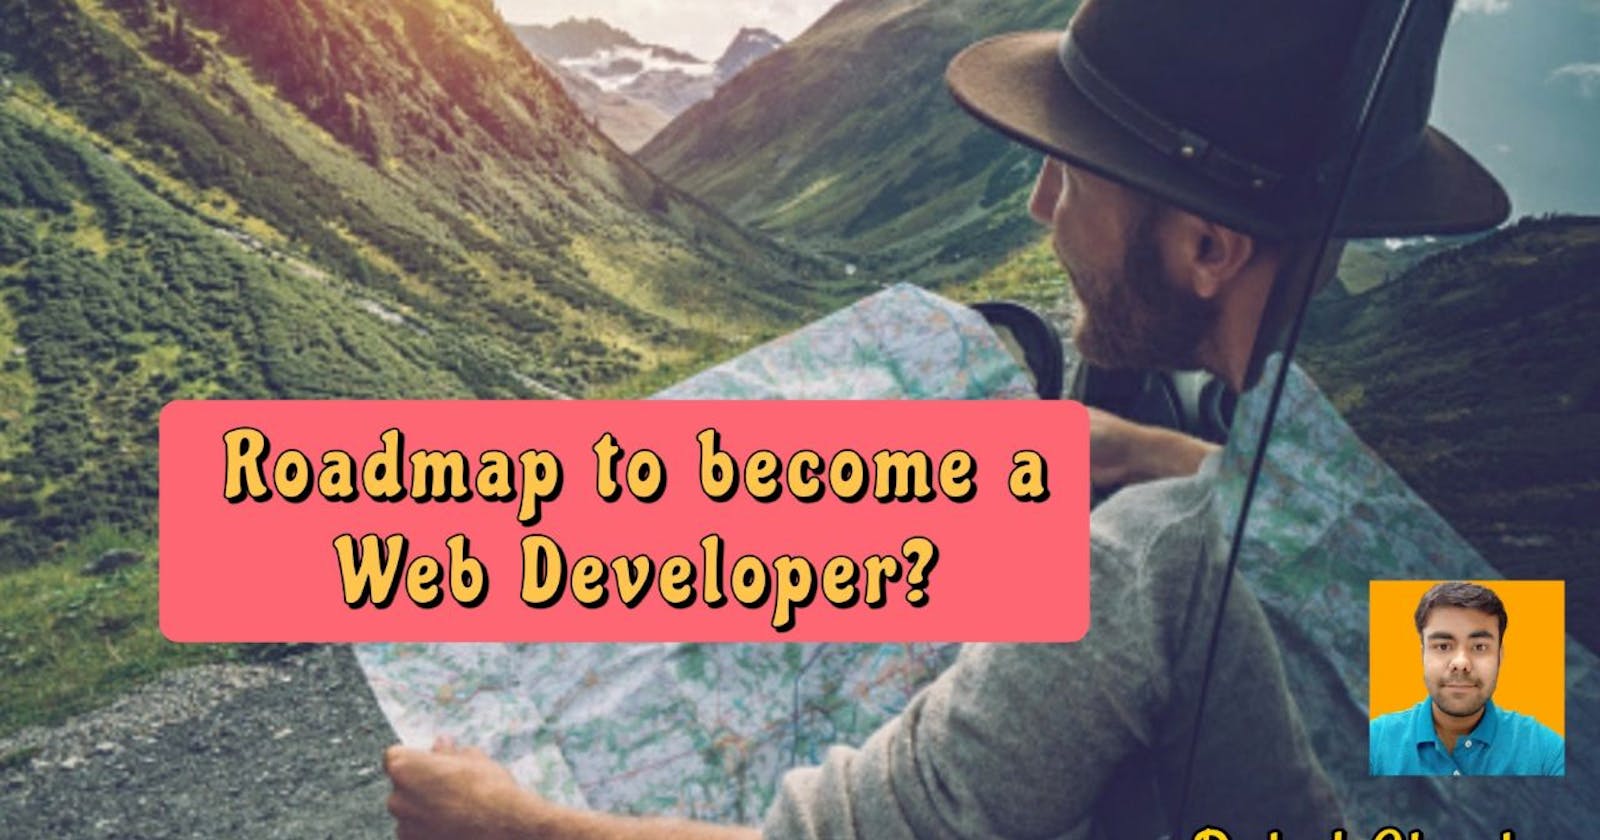 Roadmap to become a Web Developer